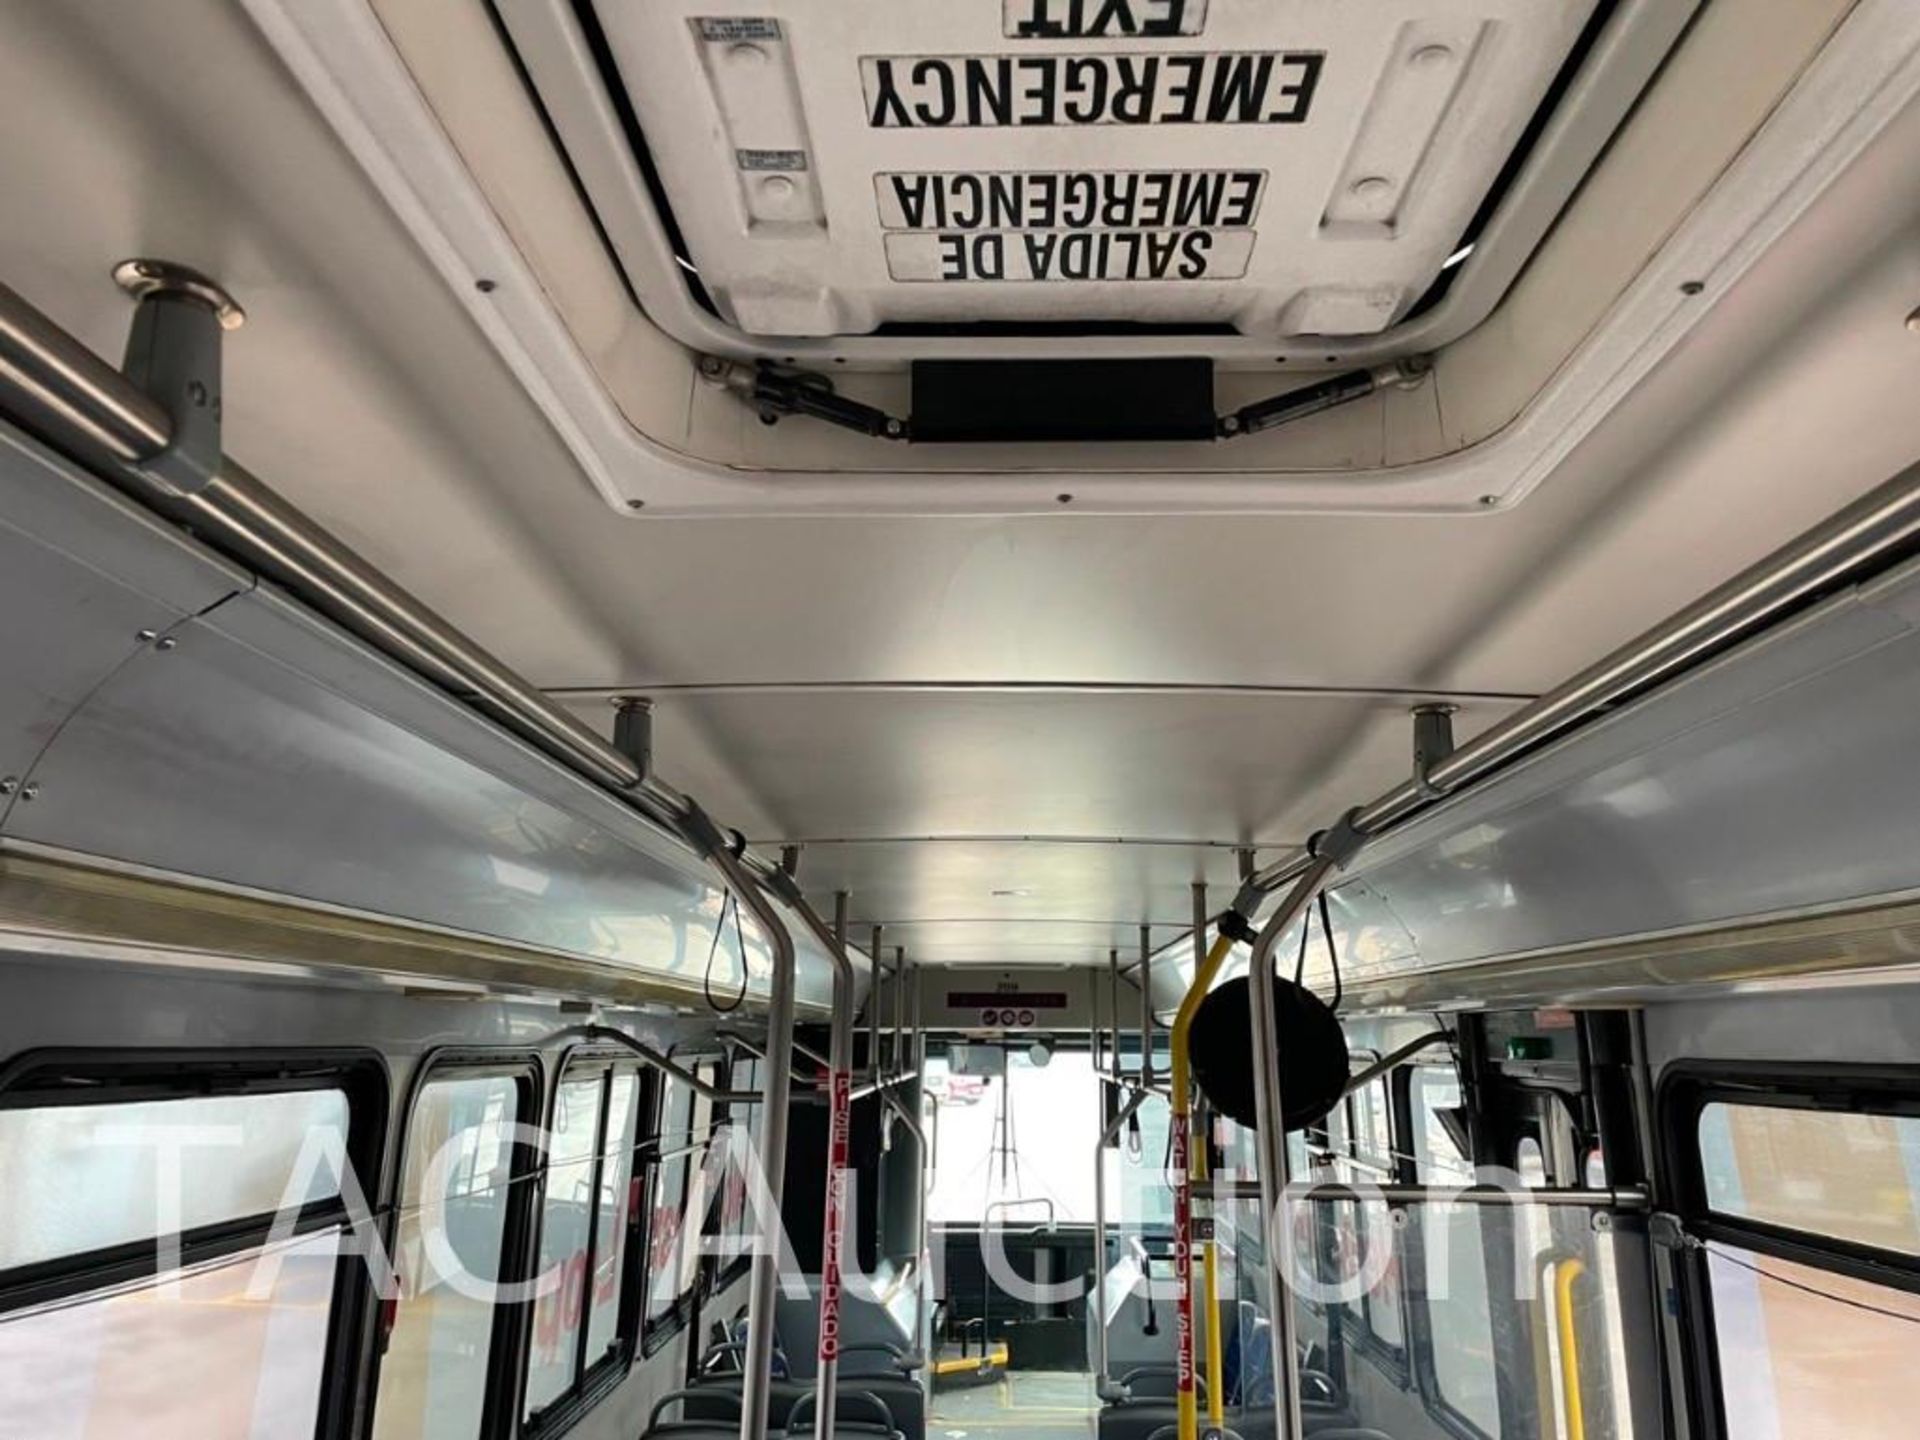 2005 Gillig Low Floor (40) Passenger Coach Transit Bus - Image 62 of 91